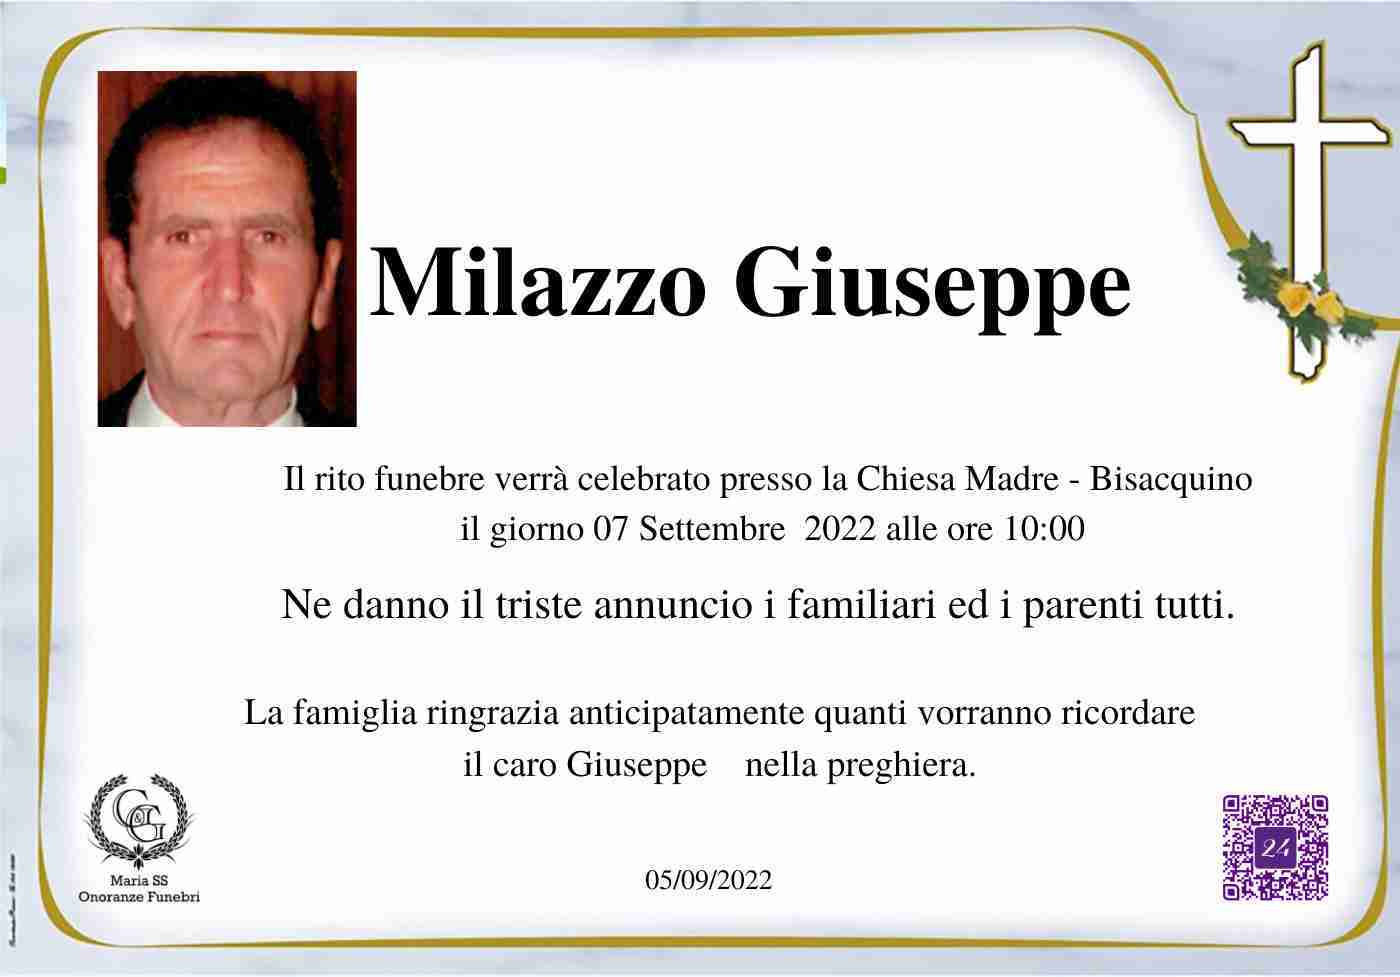 Giuseppe Milazzo